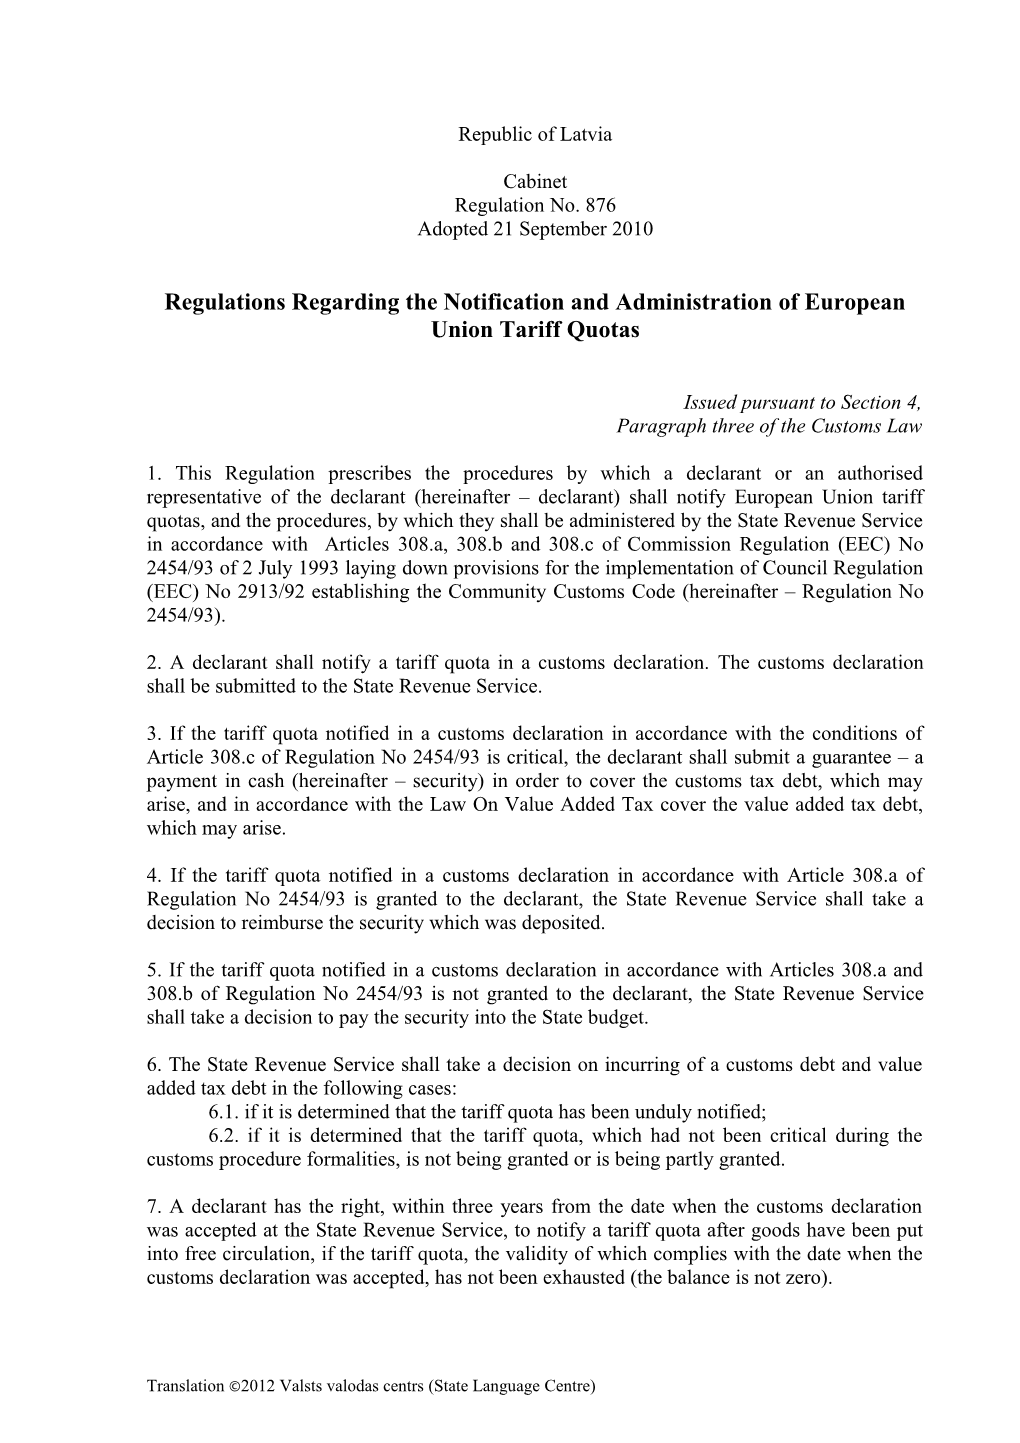 Regulations Regarding the Notification and Administration of European Union Tariff Quotas